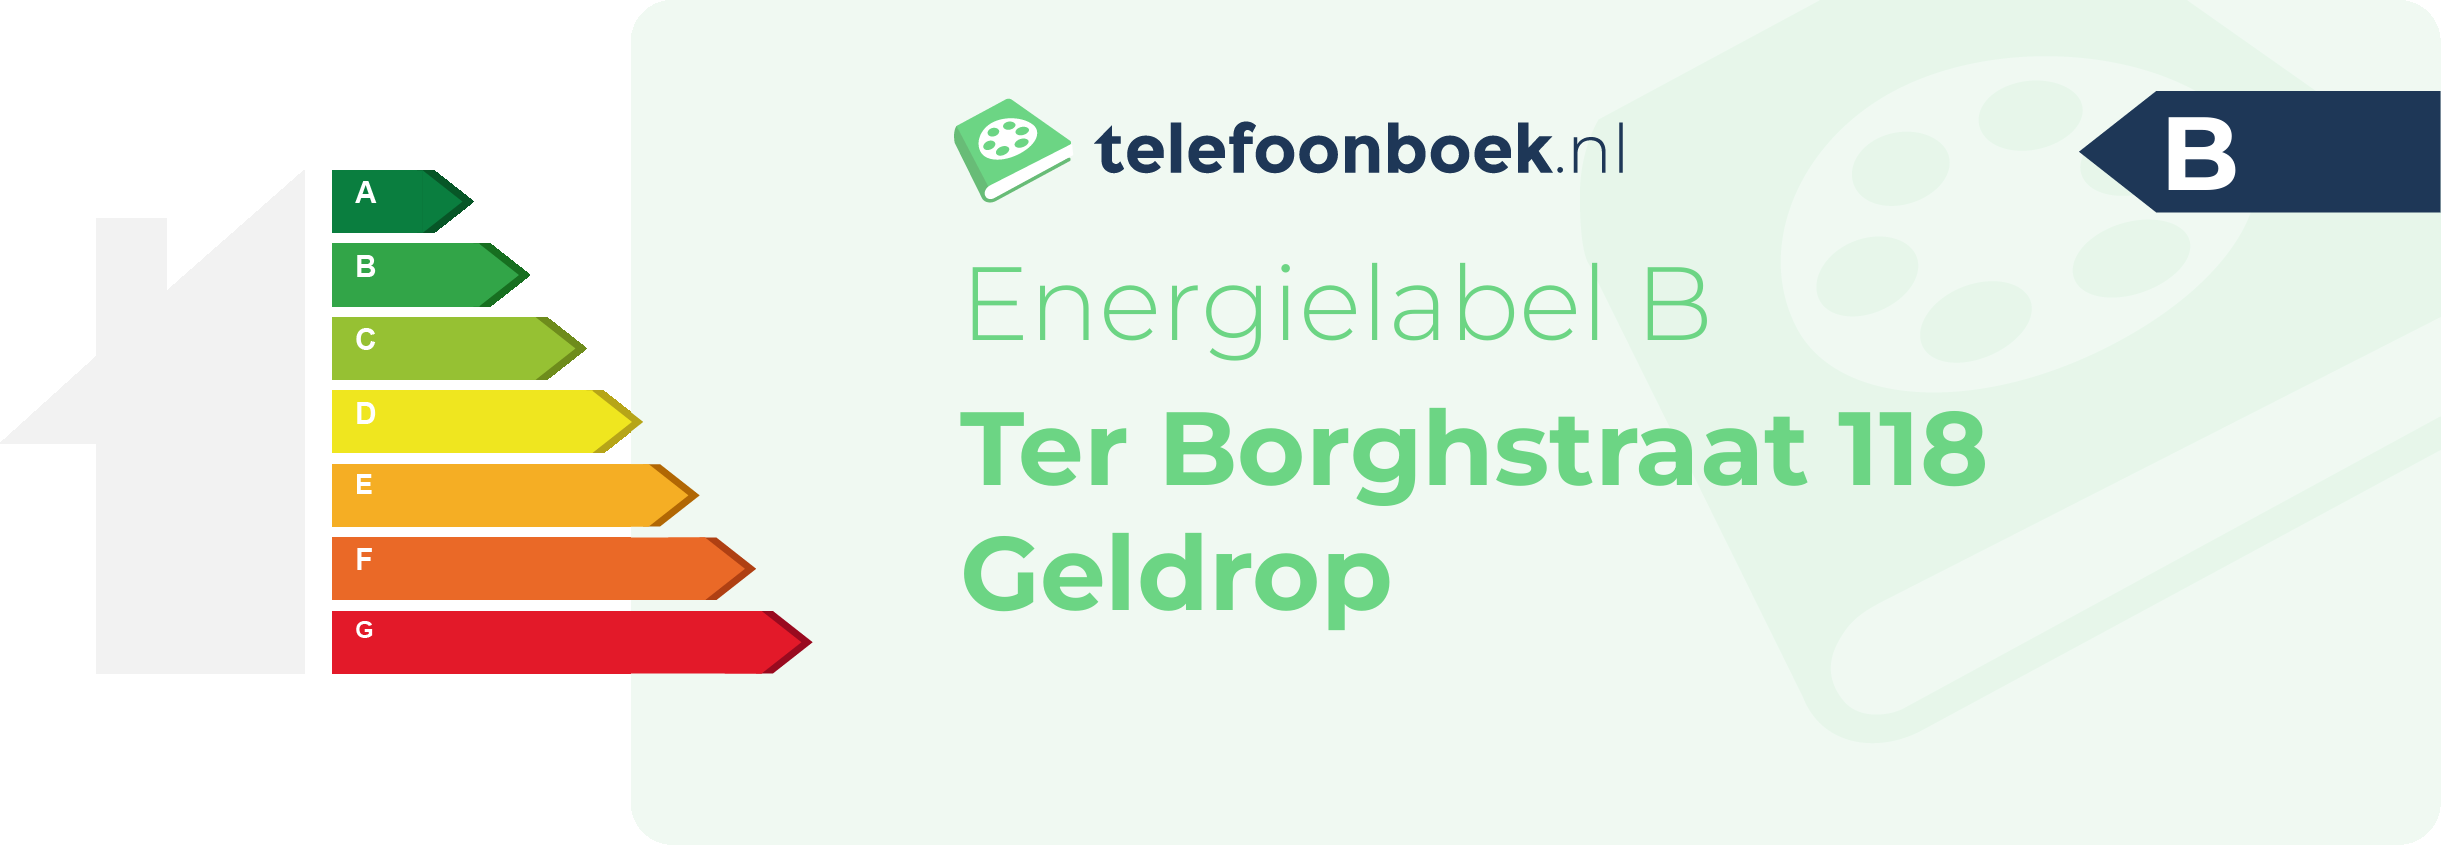 Energielabel Ter Borghstraat 118 Geldrop